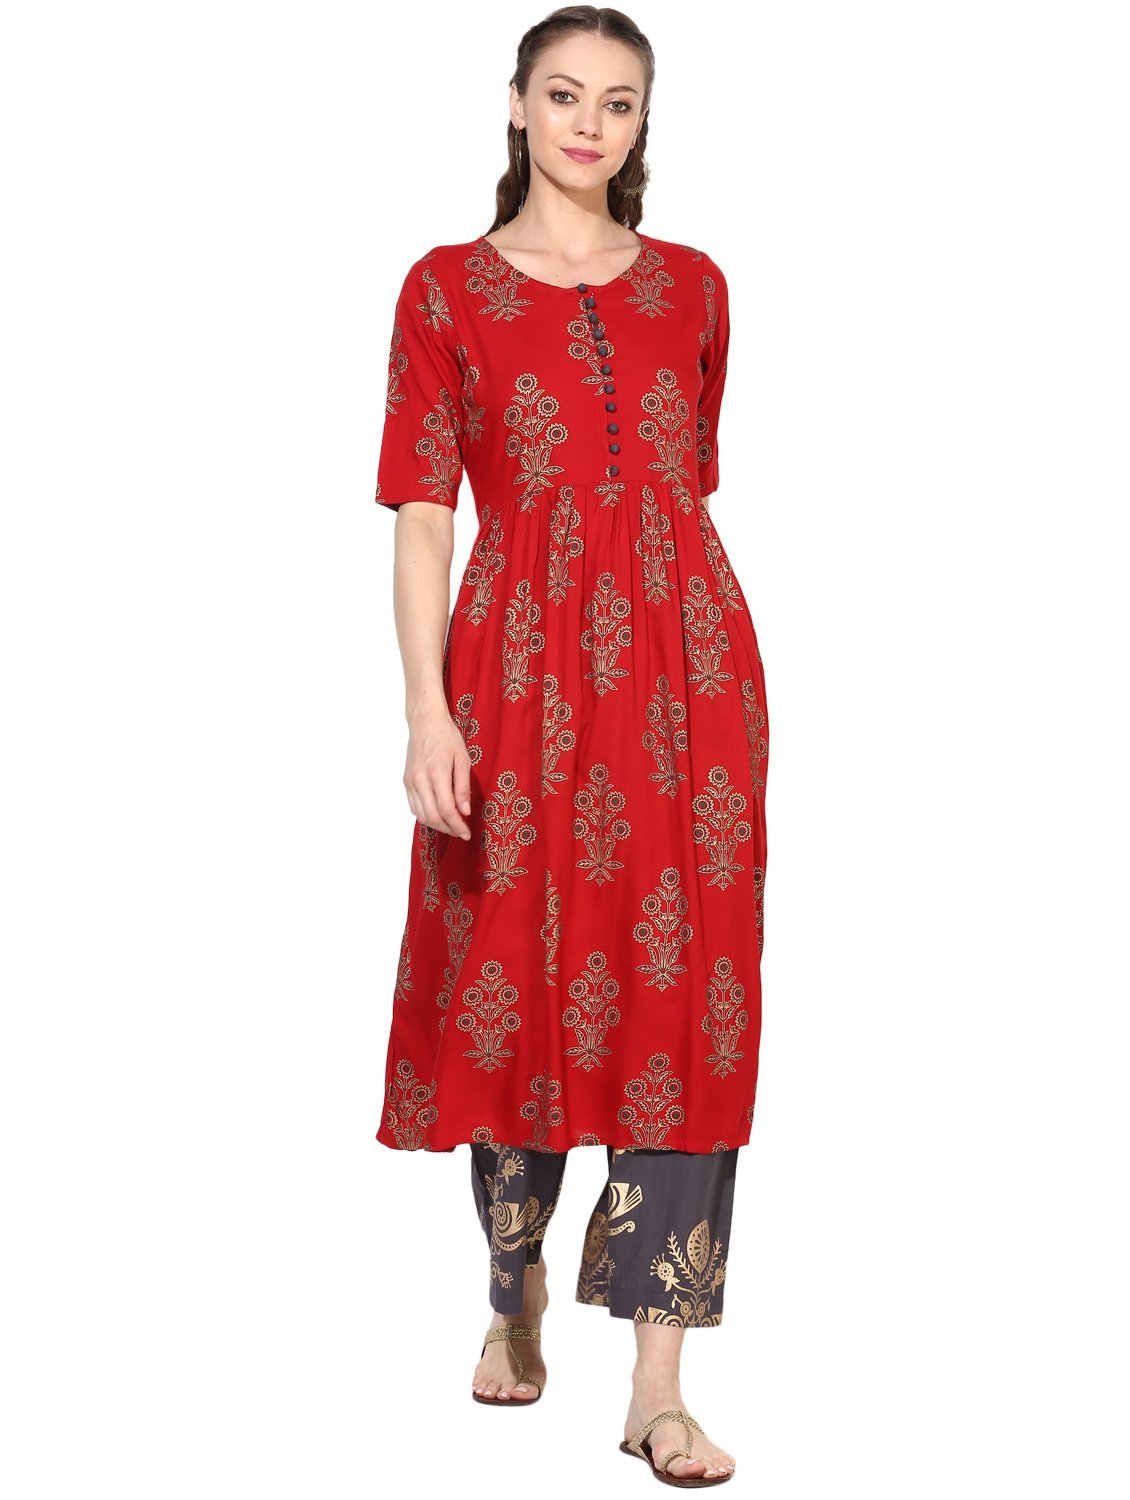 Women's Red Cotton Blend Printed Short Sleeve Round Neck Casual Kurta Set - Myshka